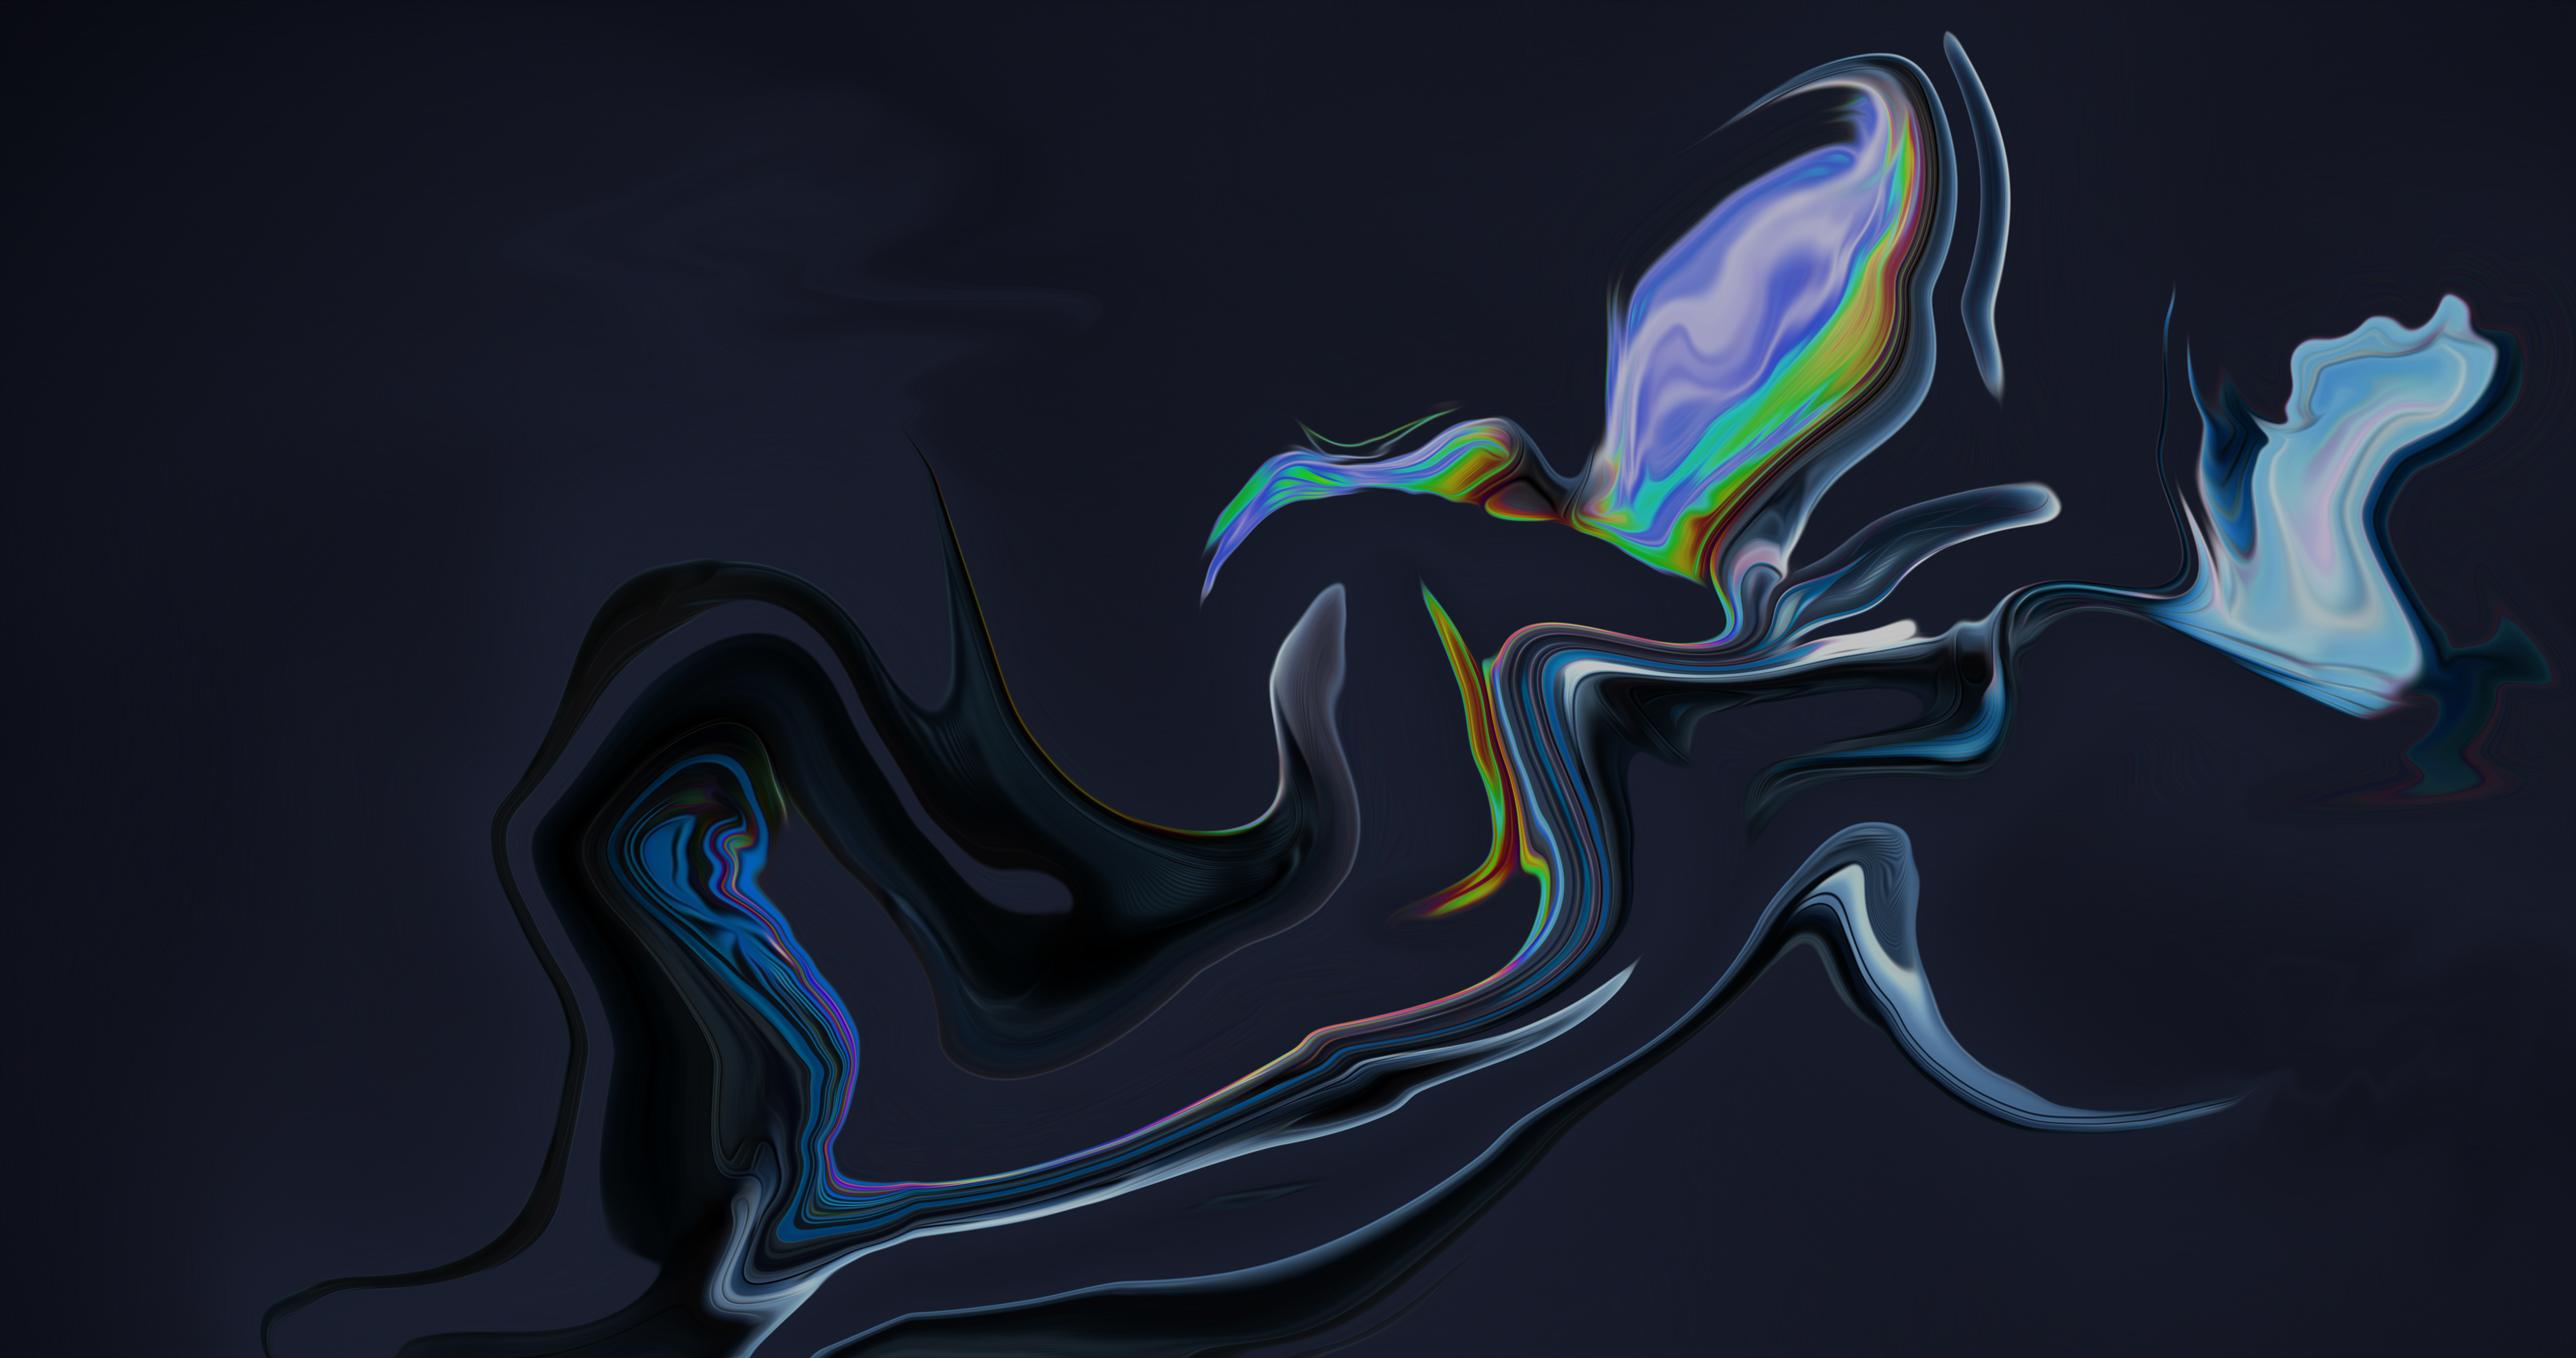 Abstract Shapes Fluid Liquid Artwork Digital Art 8 K Colorful Simple Background 8192x4320